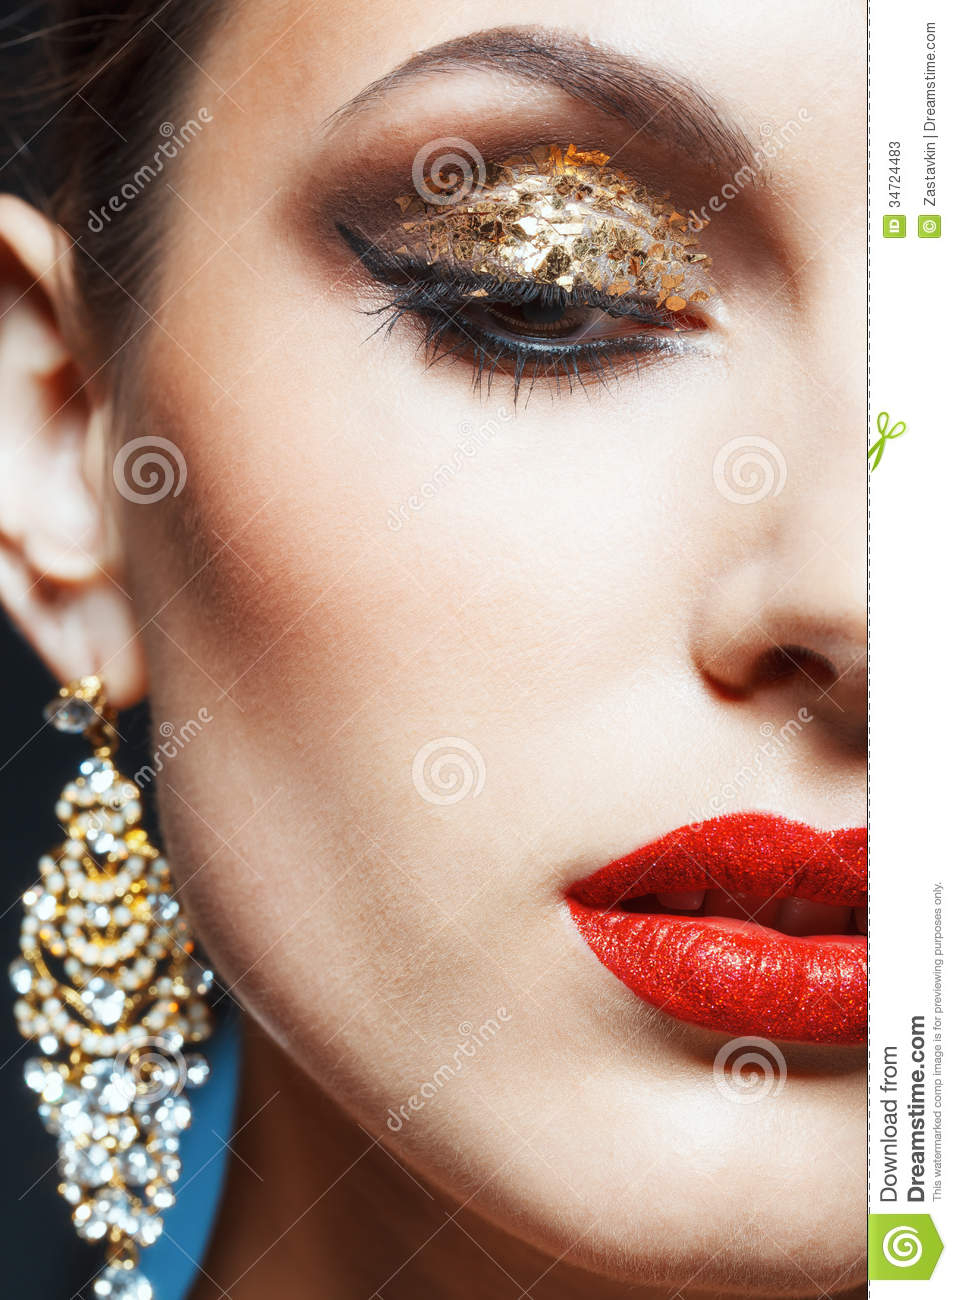 Golden Eye Makeup Golden Eye Makeup Stock Image Image Of Female Beautiful 34724483